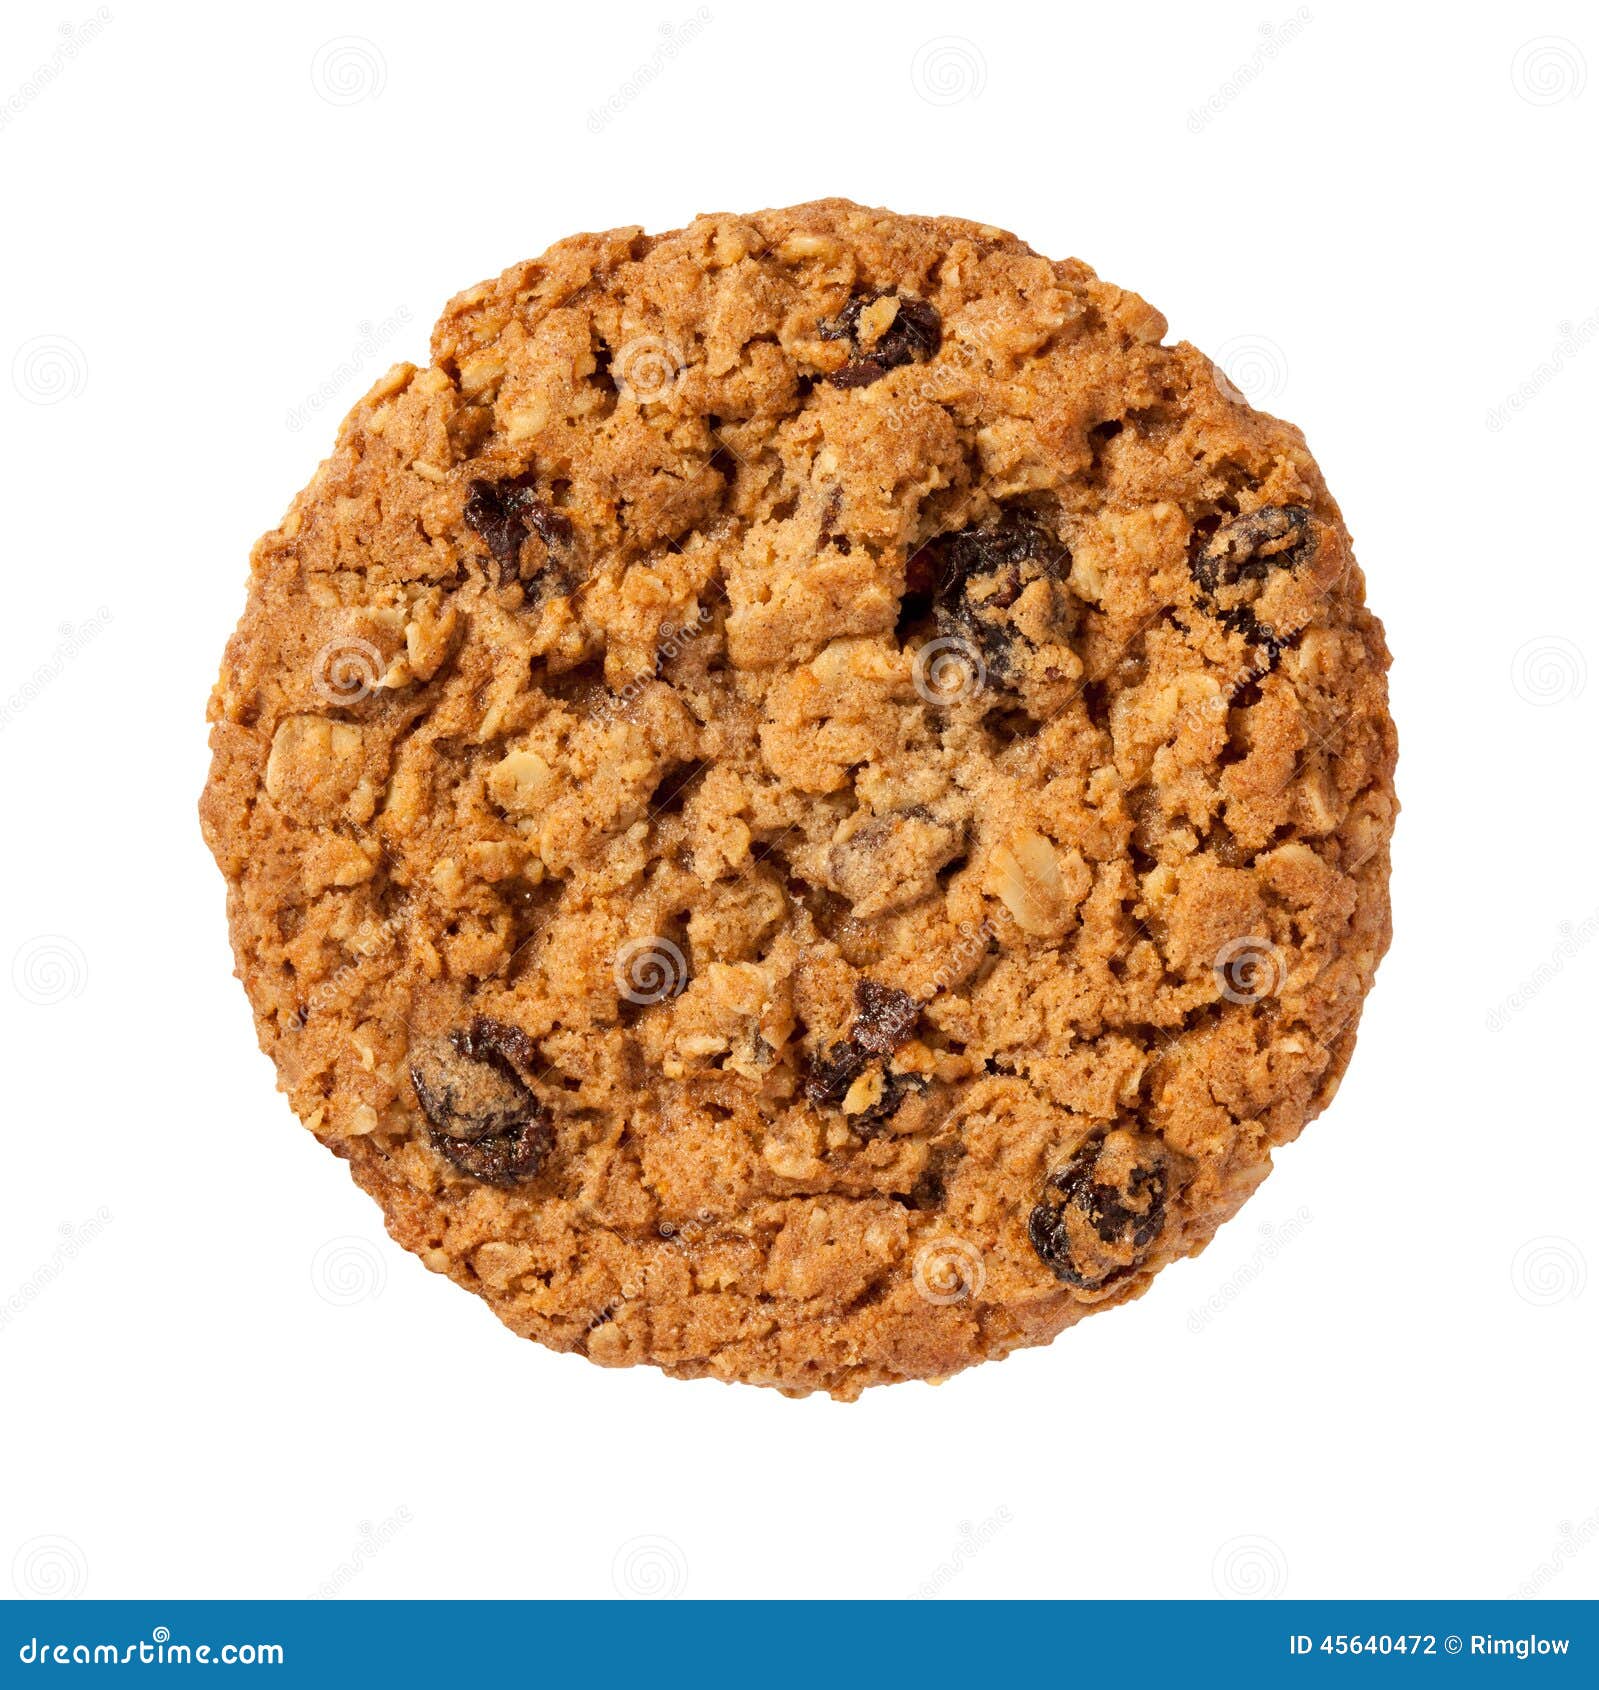 oatmeal raisin cookie 